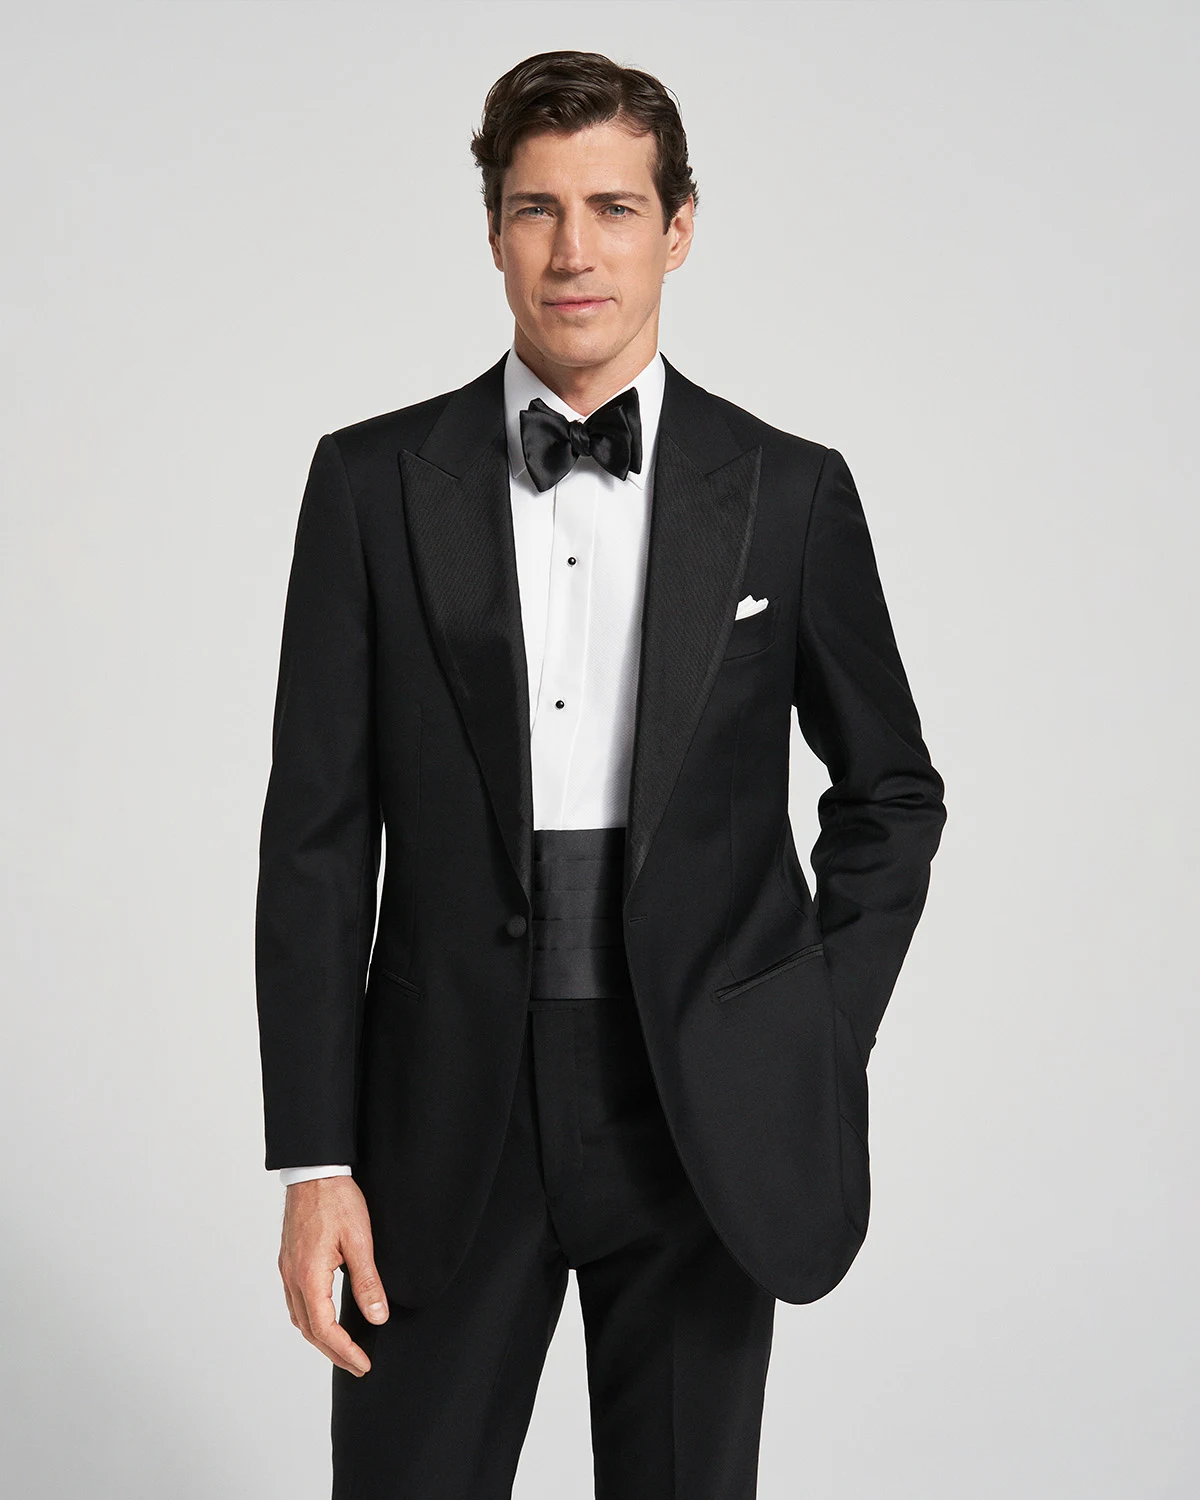 black tie dress code, how to wear black tie